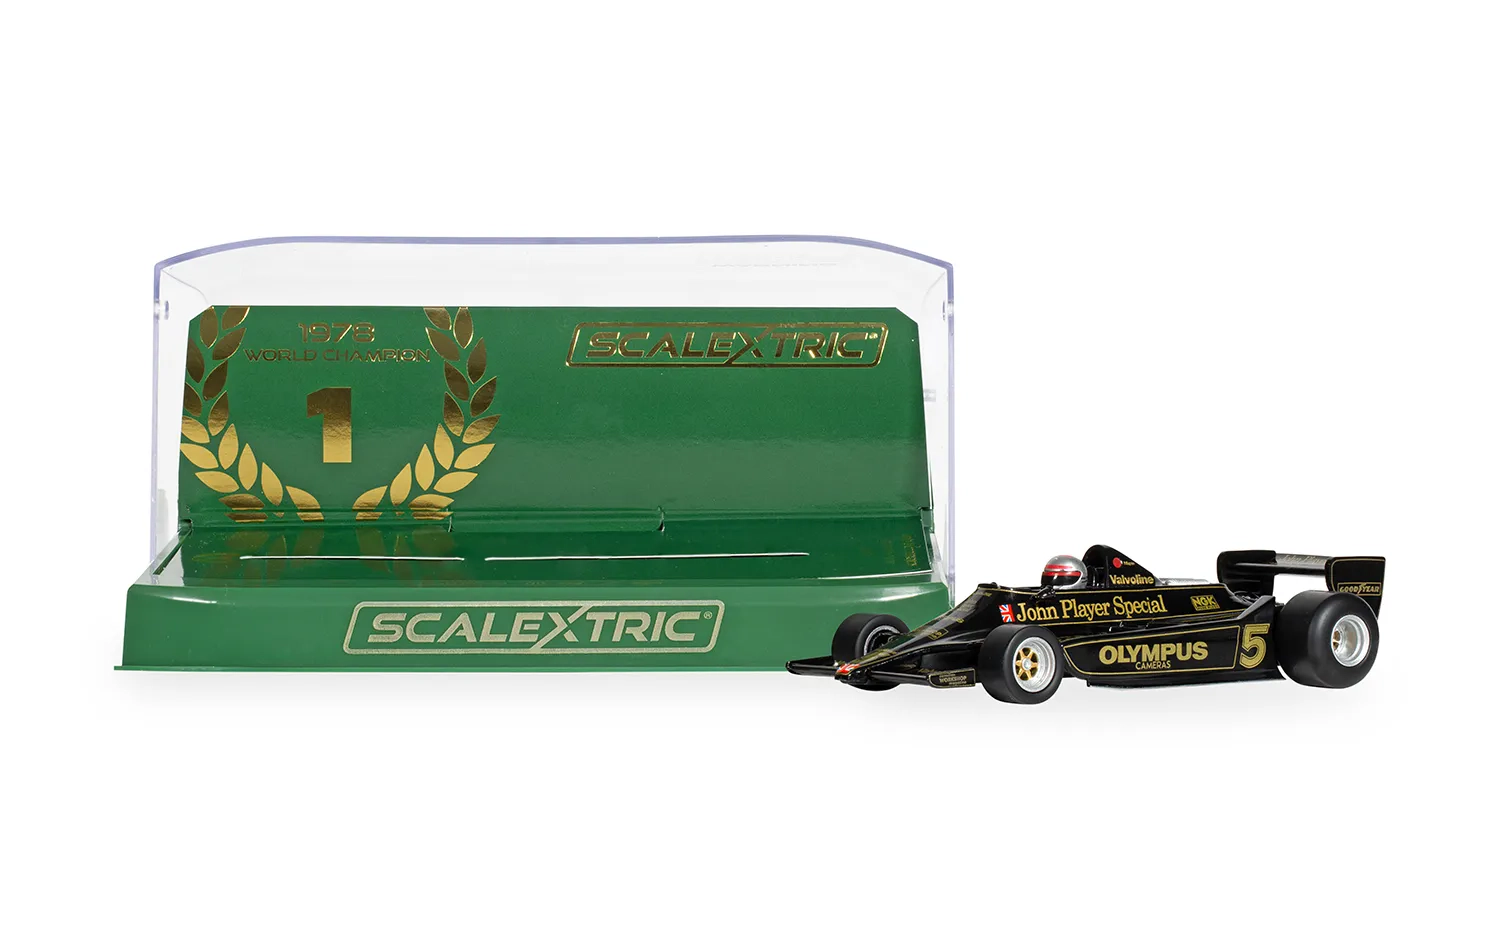 Lotus 79 - Mario Andretti - 1978 World Champion Edition